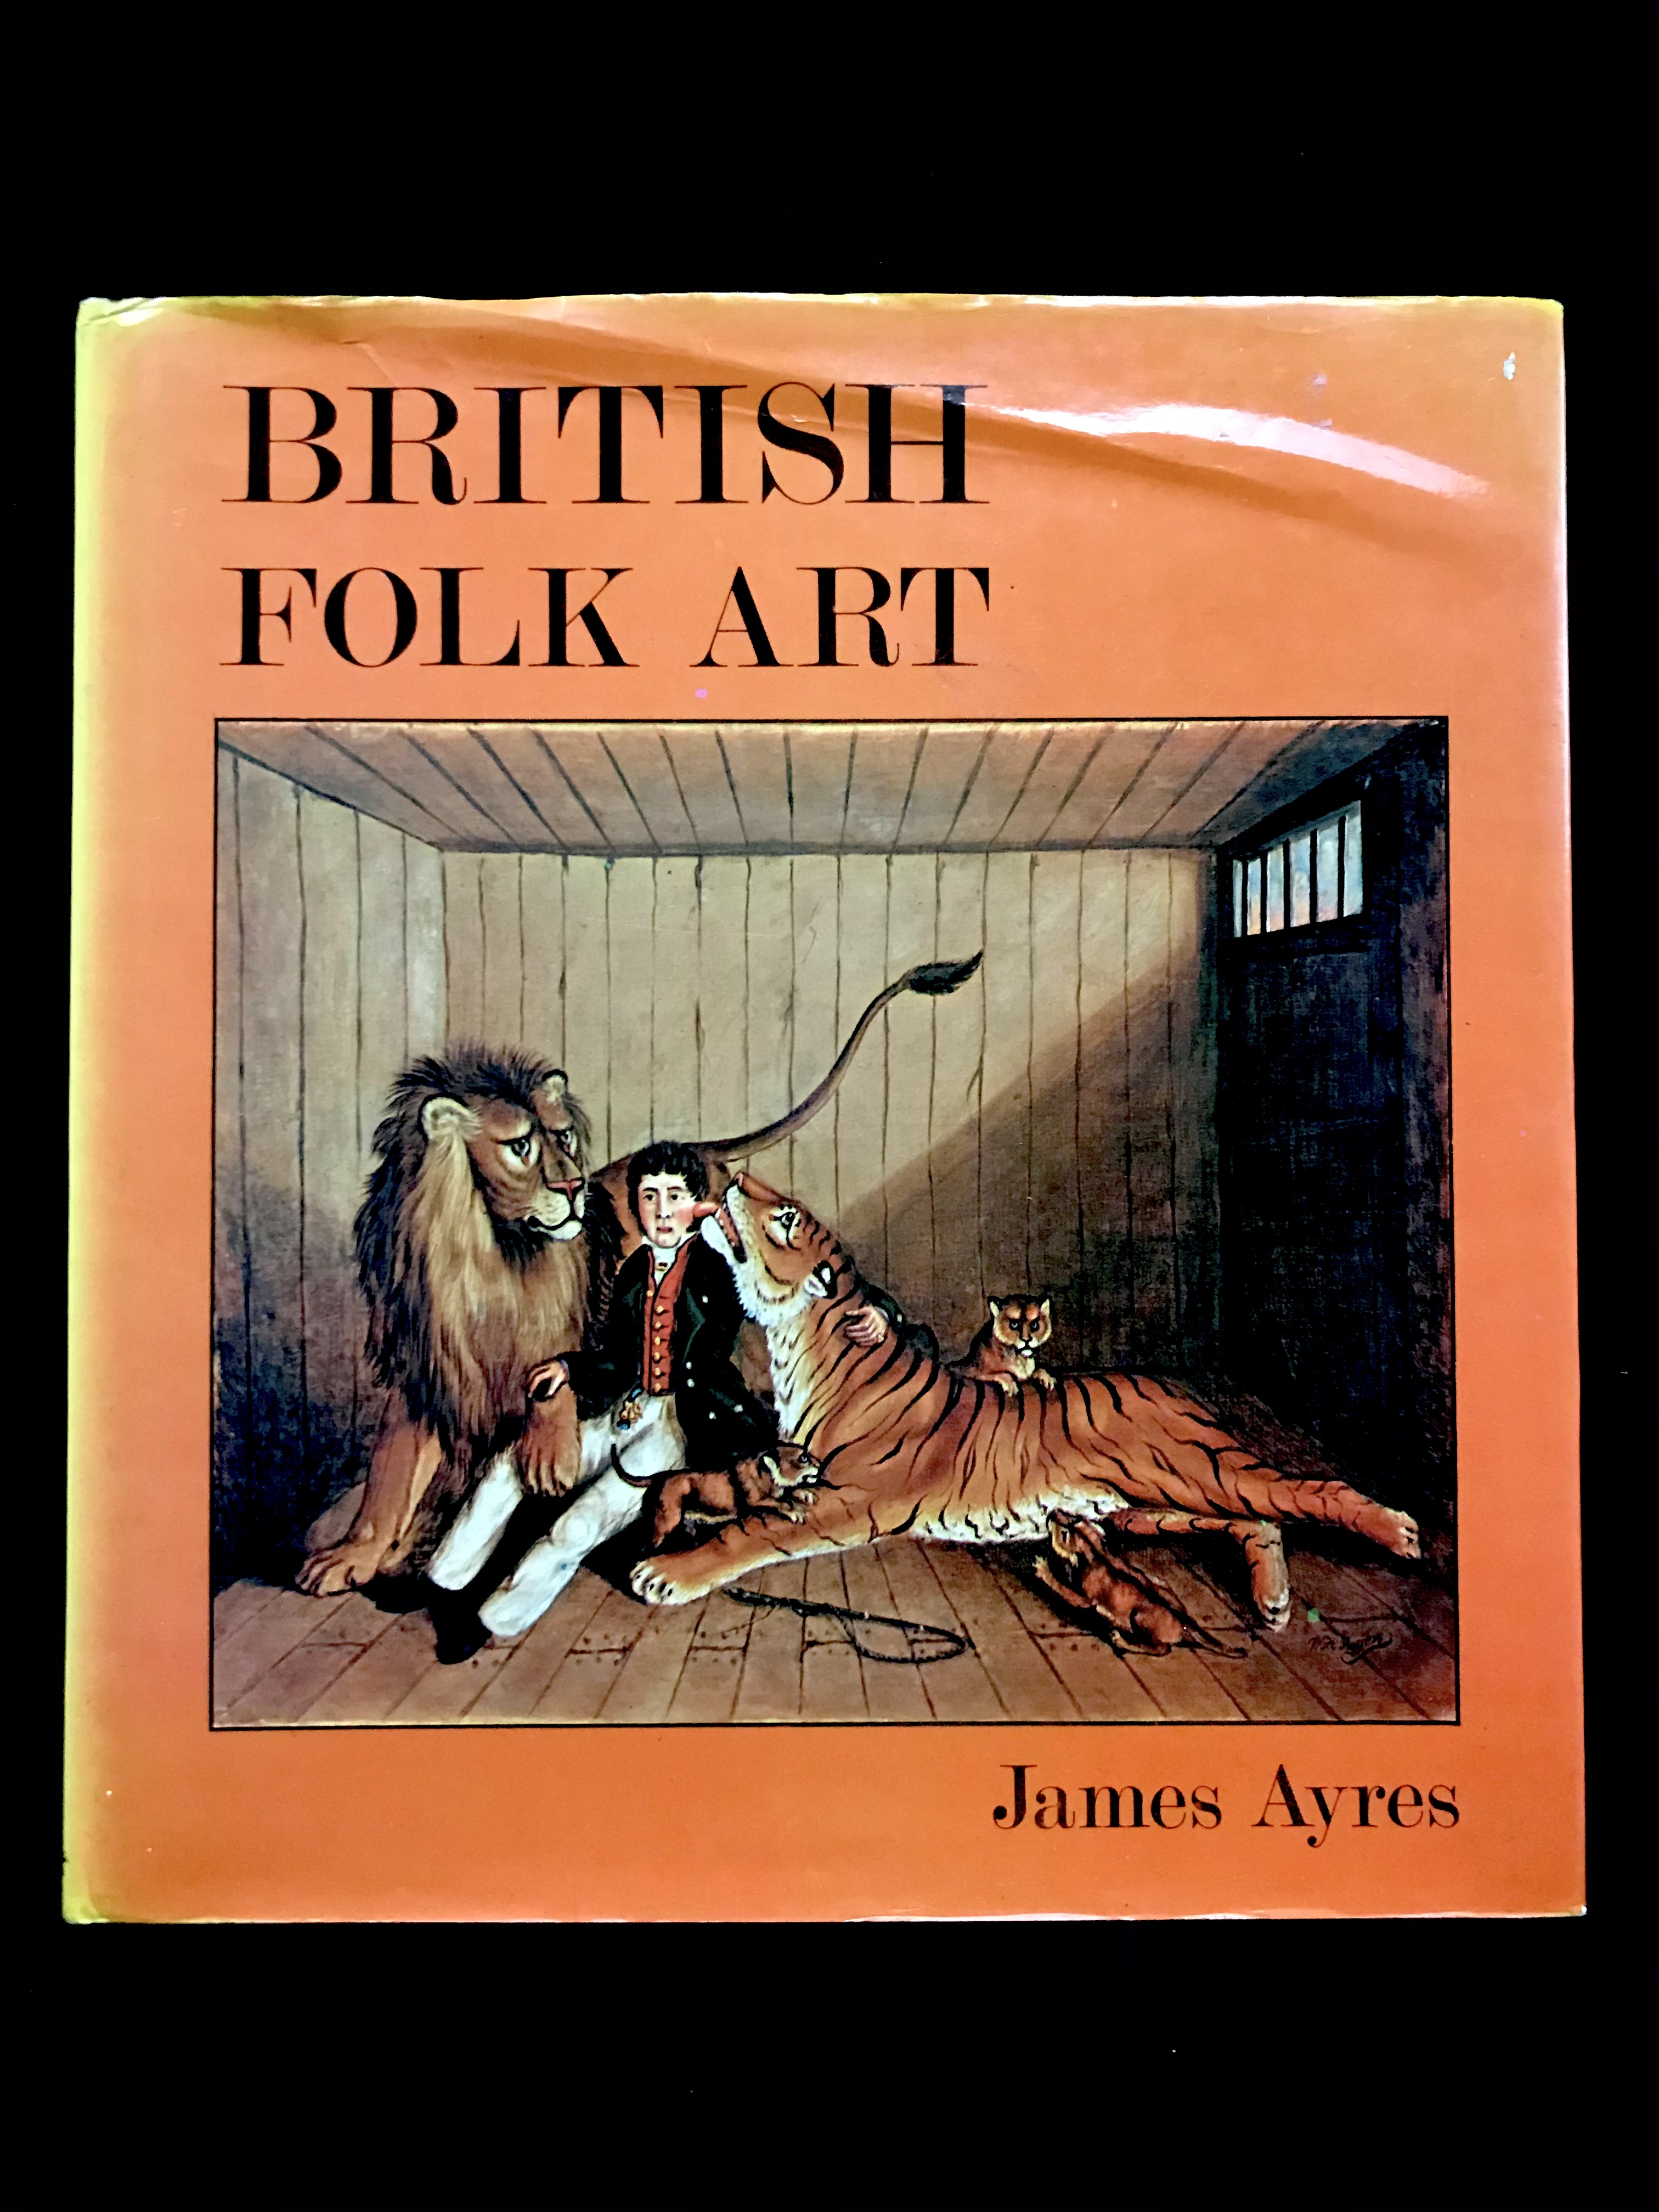 British Folk Art by James Ayres